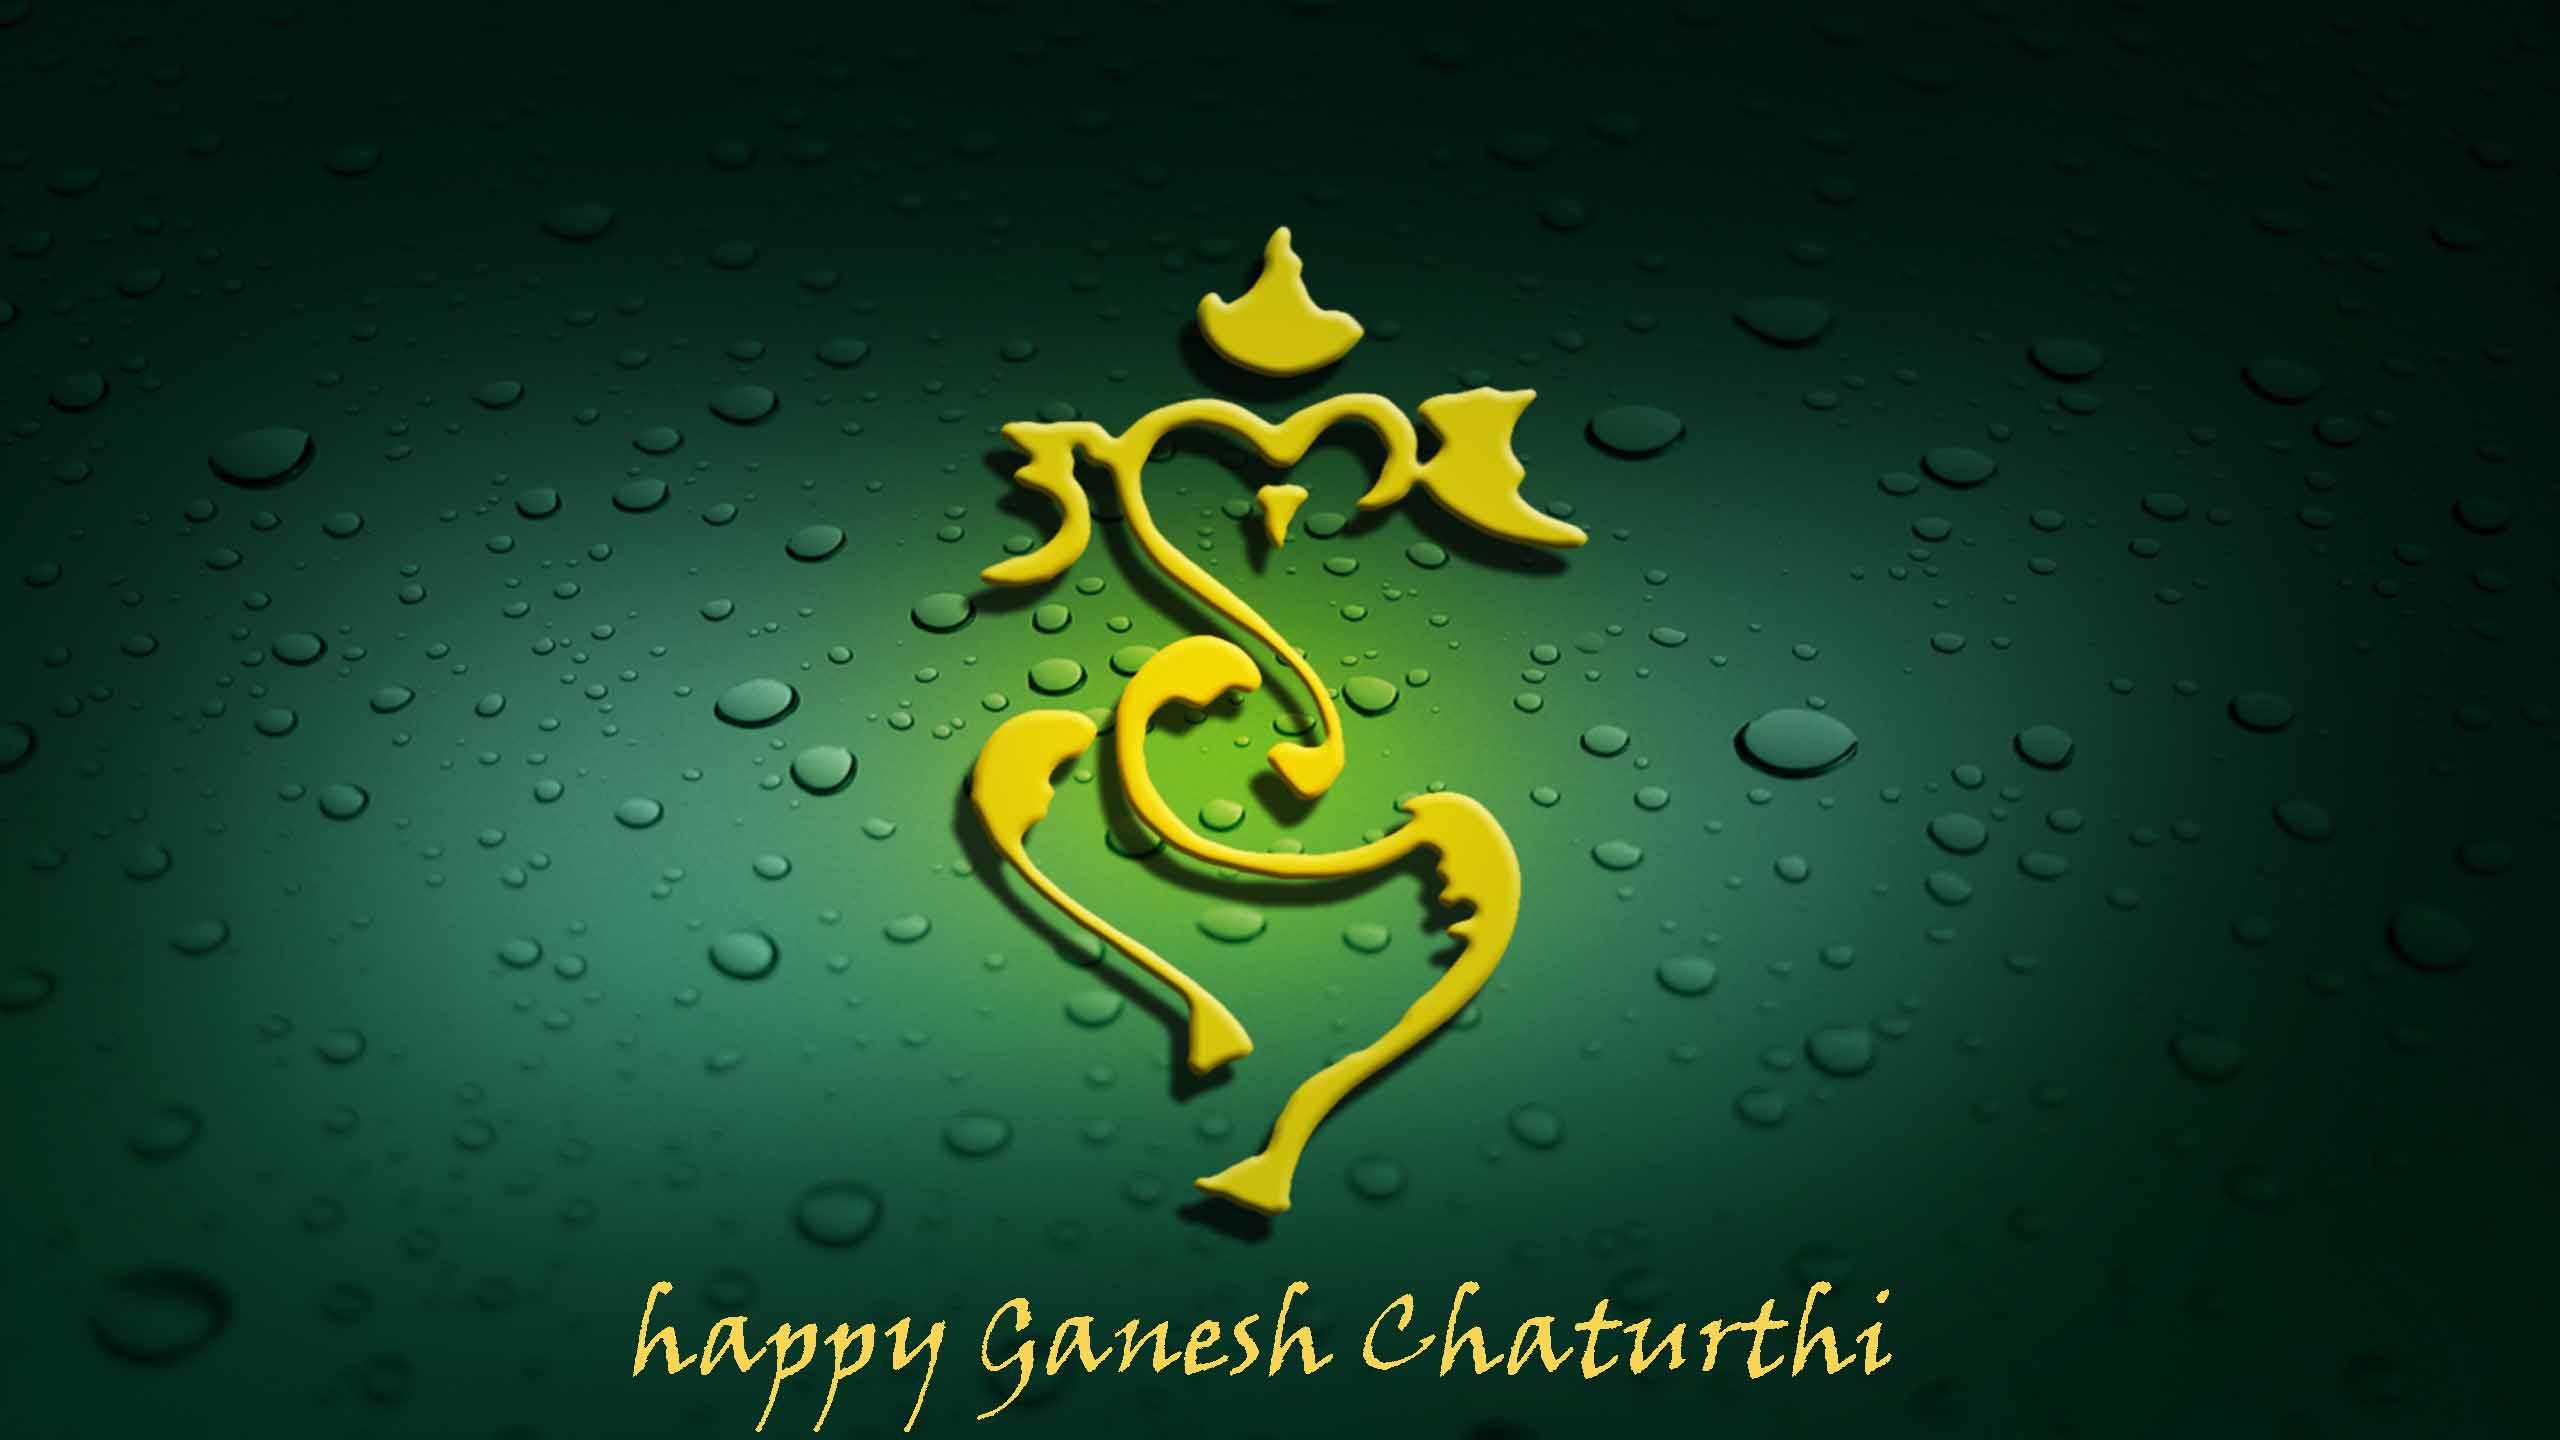 Happy Ganesh Chaturthi 2019 HD Image, Wallpaper, Photo, Pics